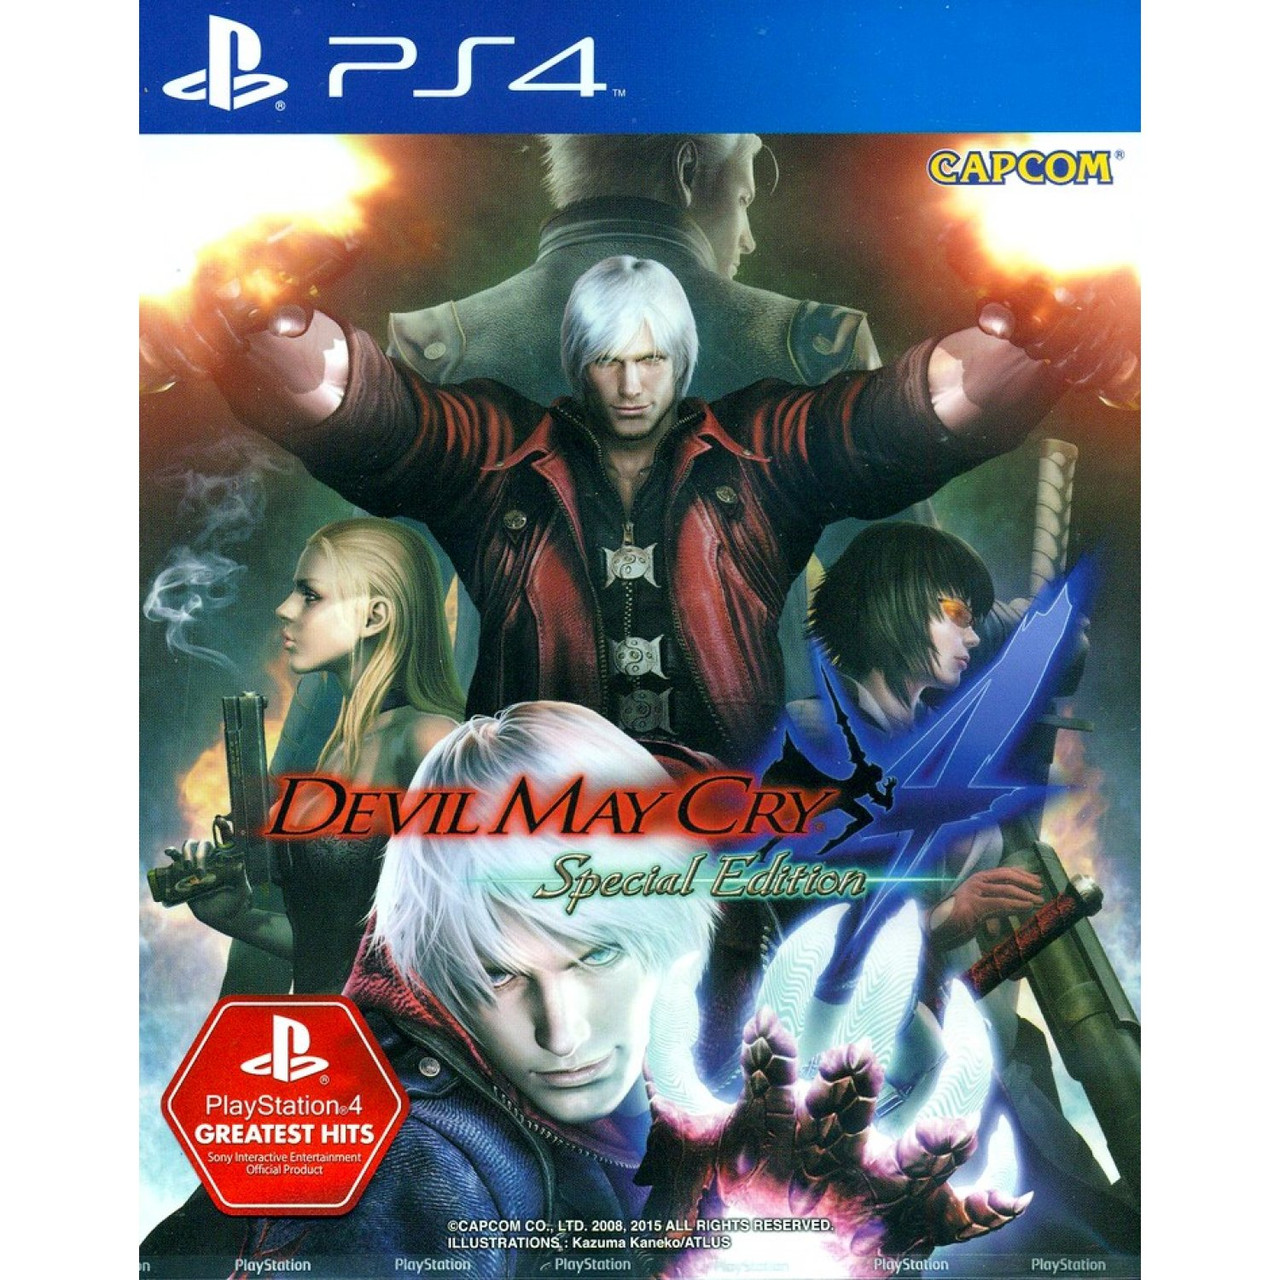 DmC Devil May Cry: Definitive Edition - PlayStation 4, PlayStation 4